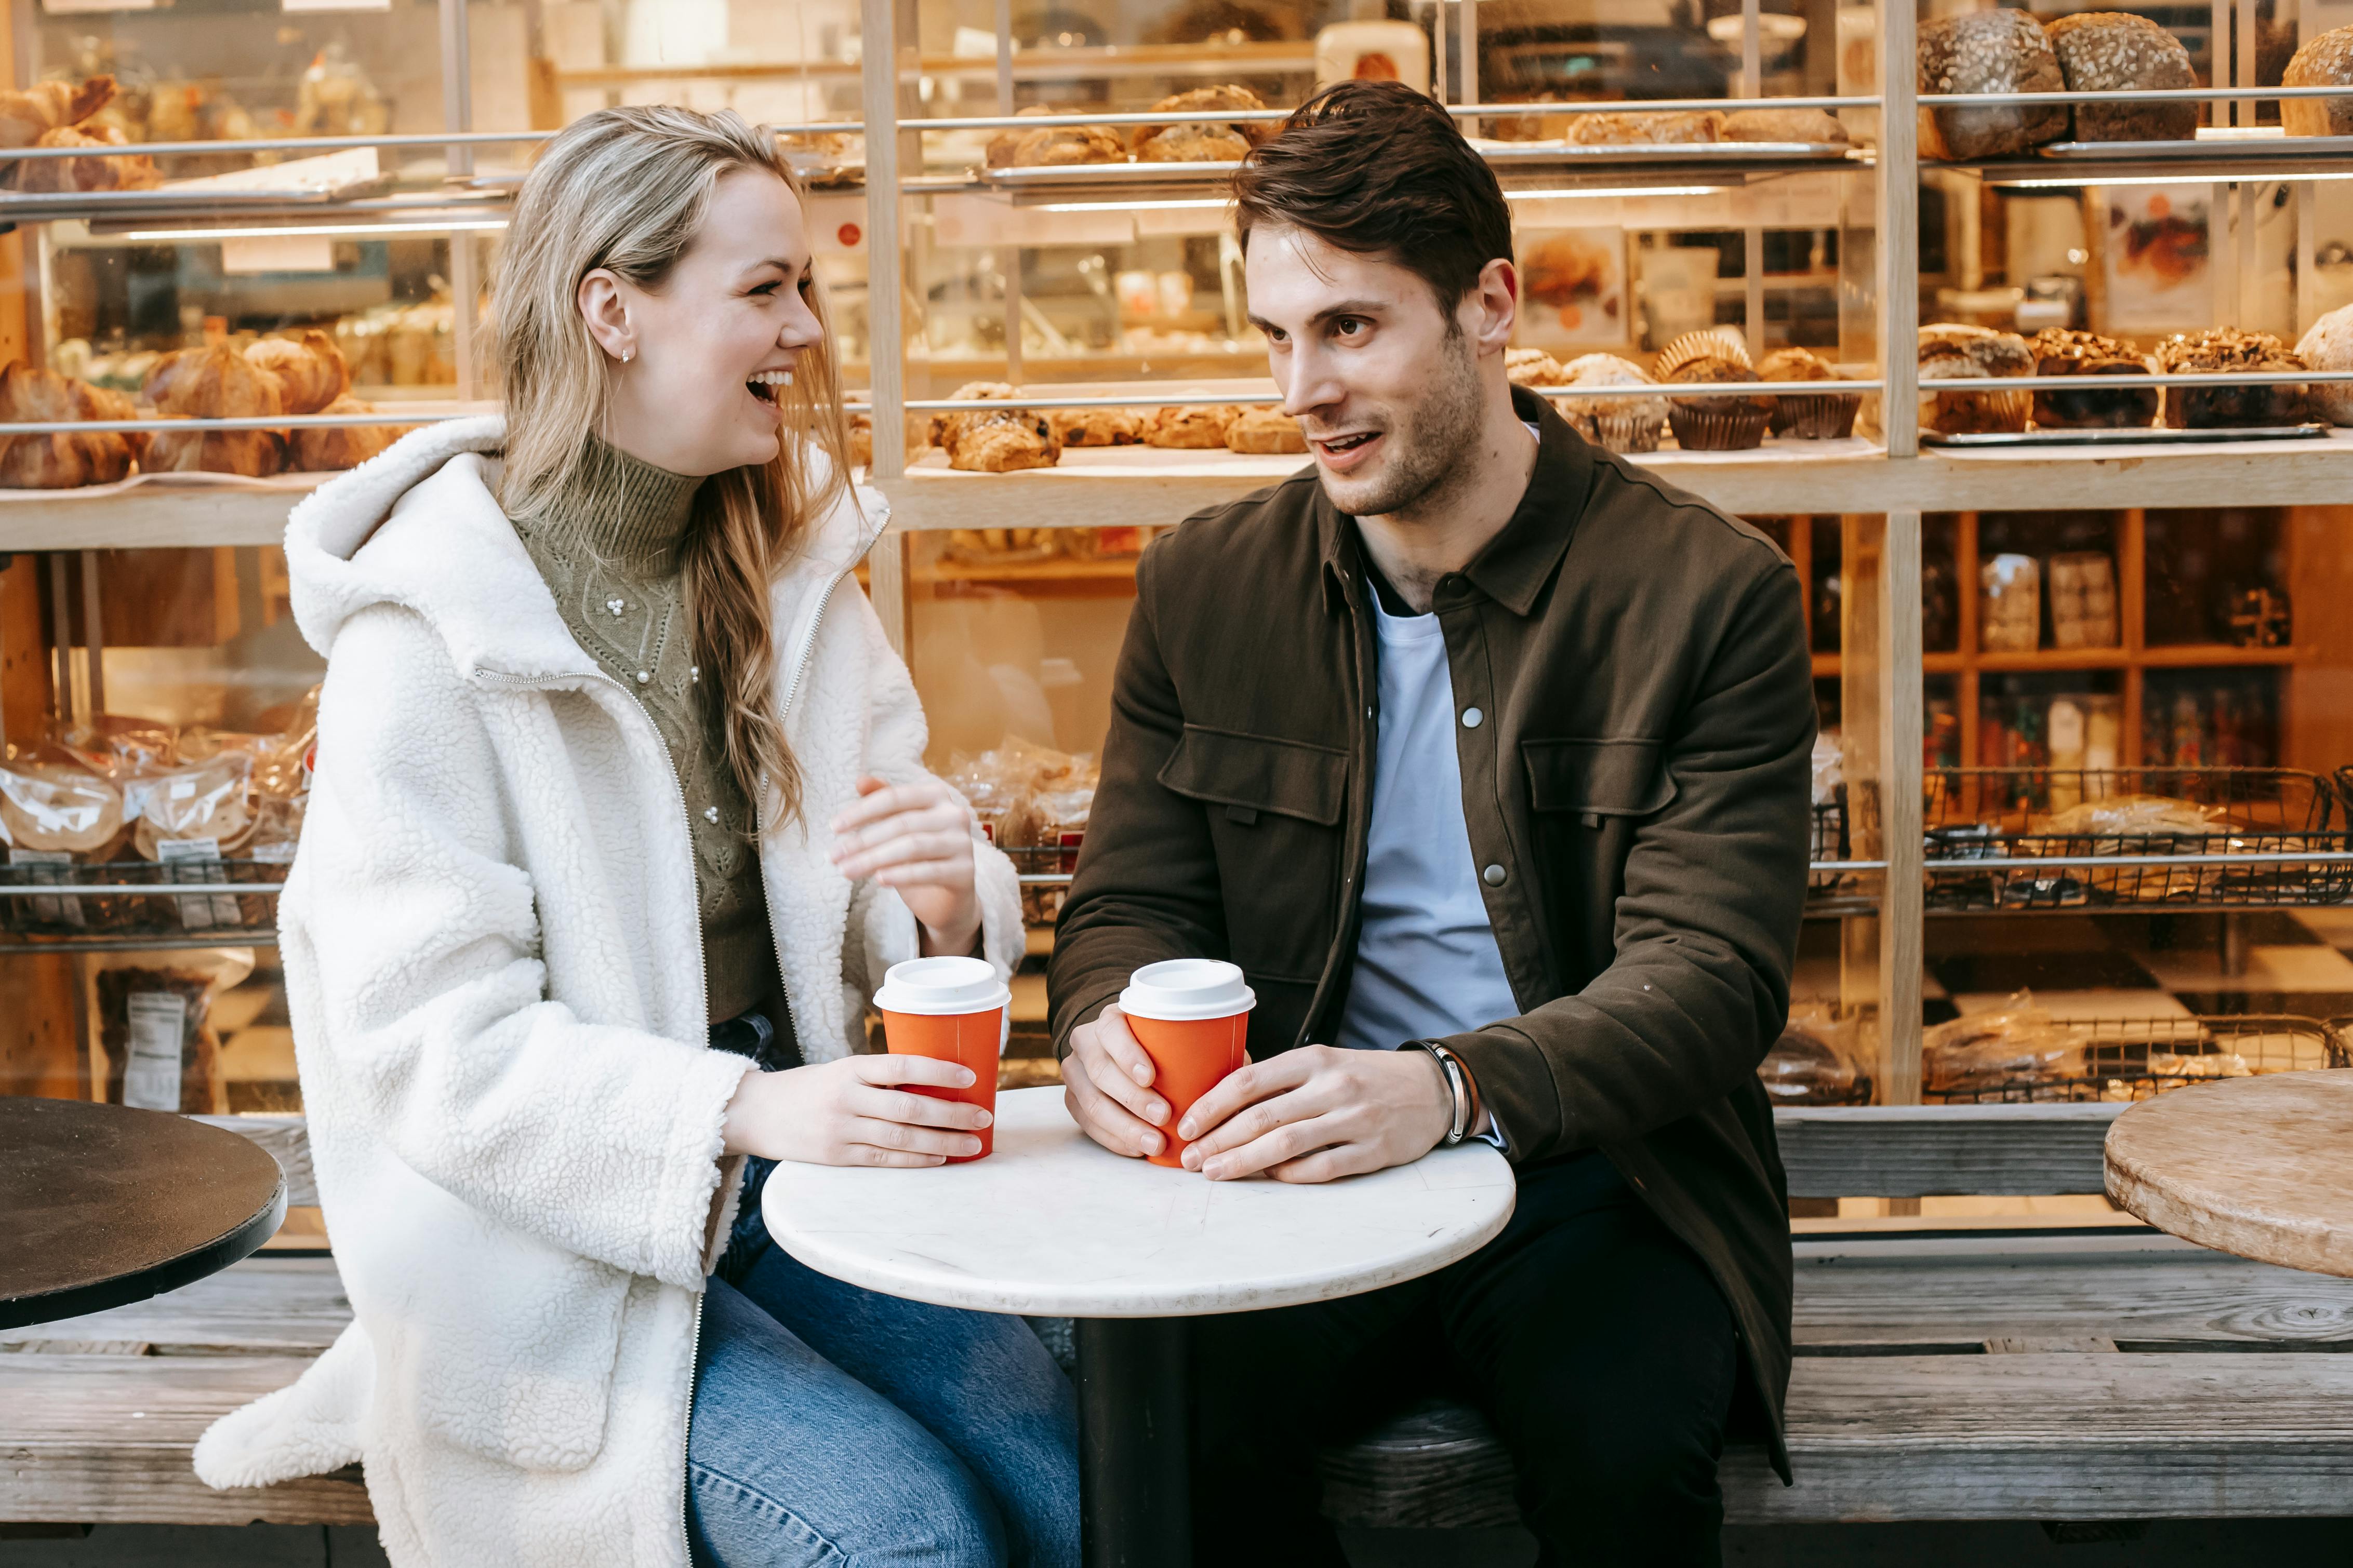 A happy couple having coffee | Source: Pexels